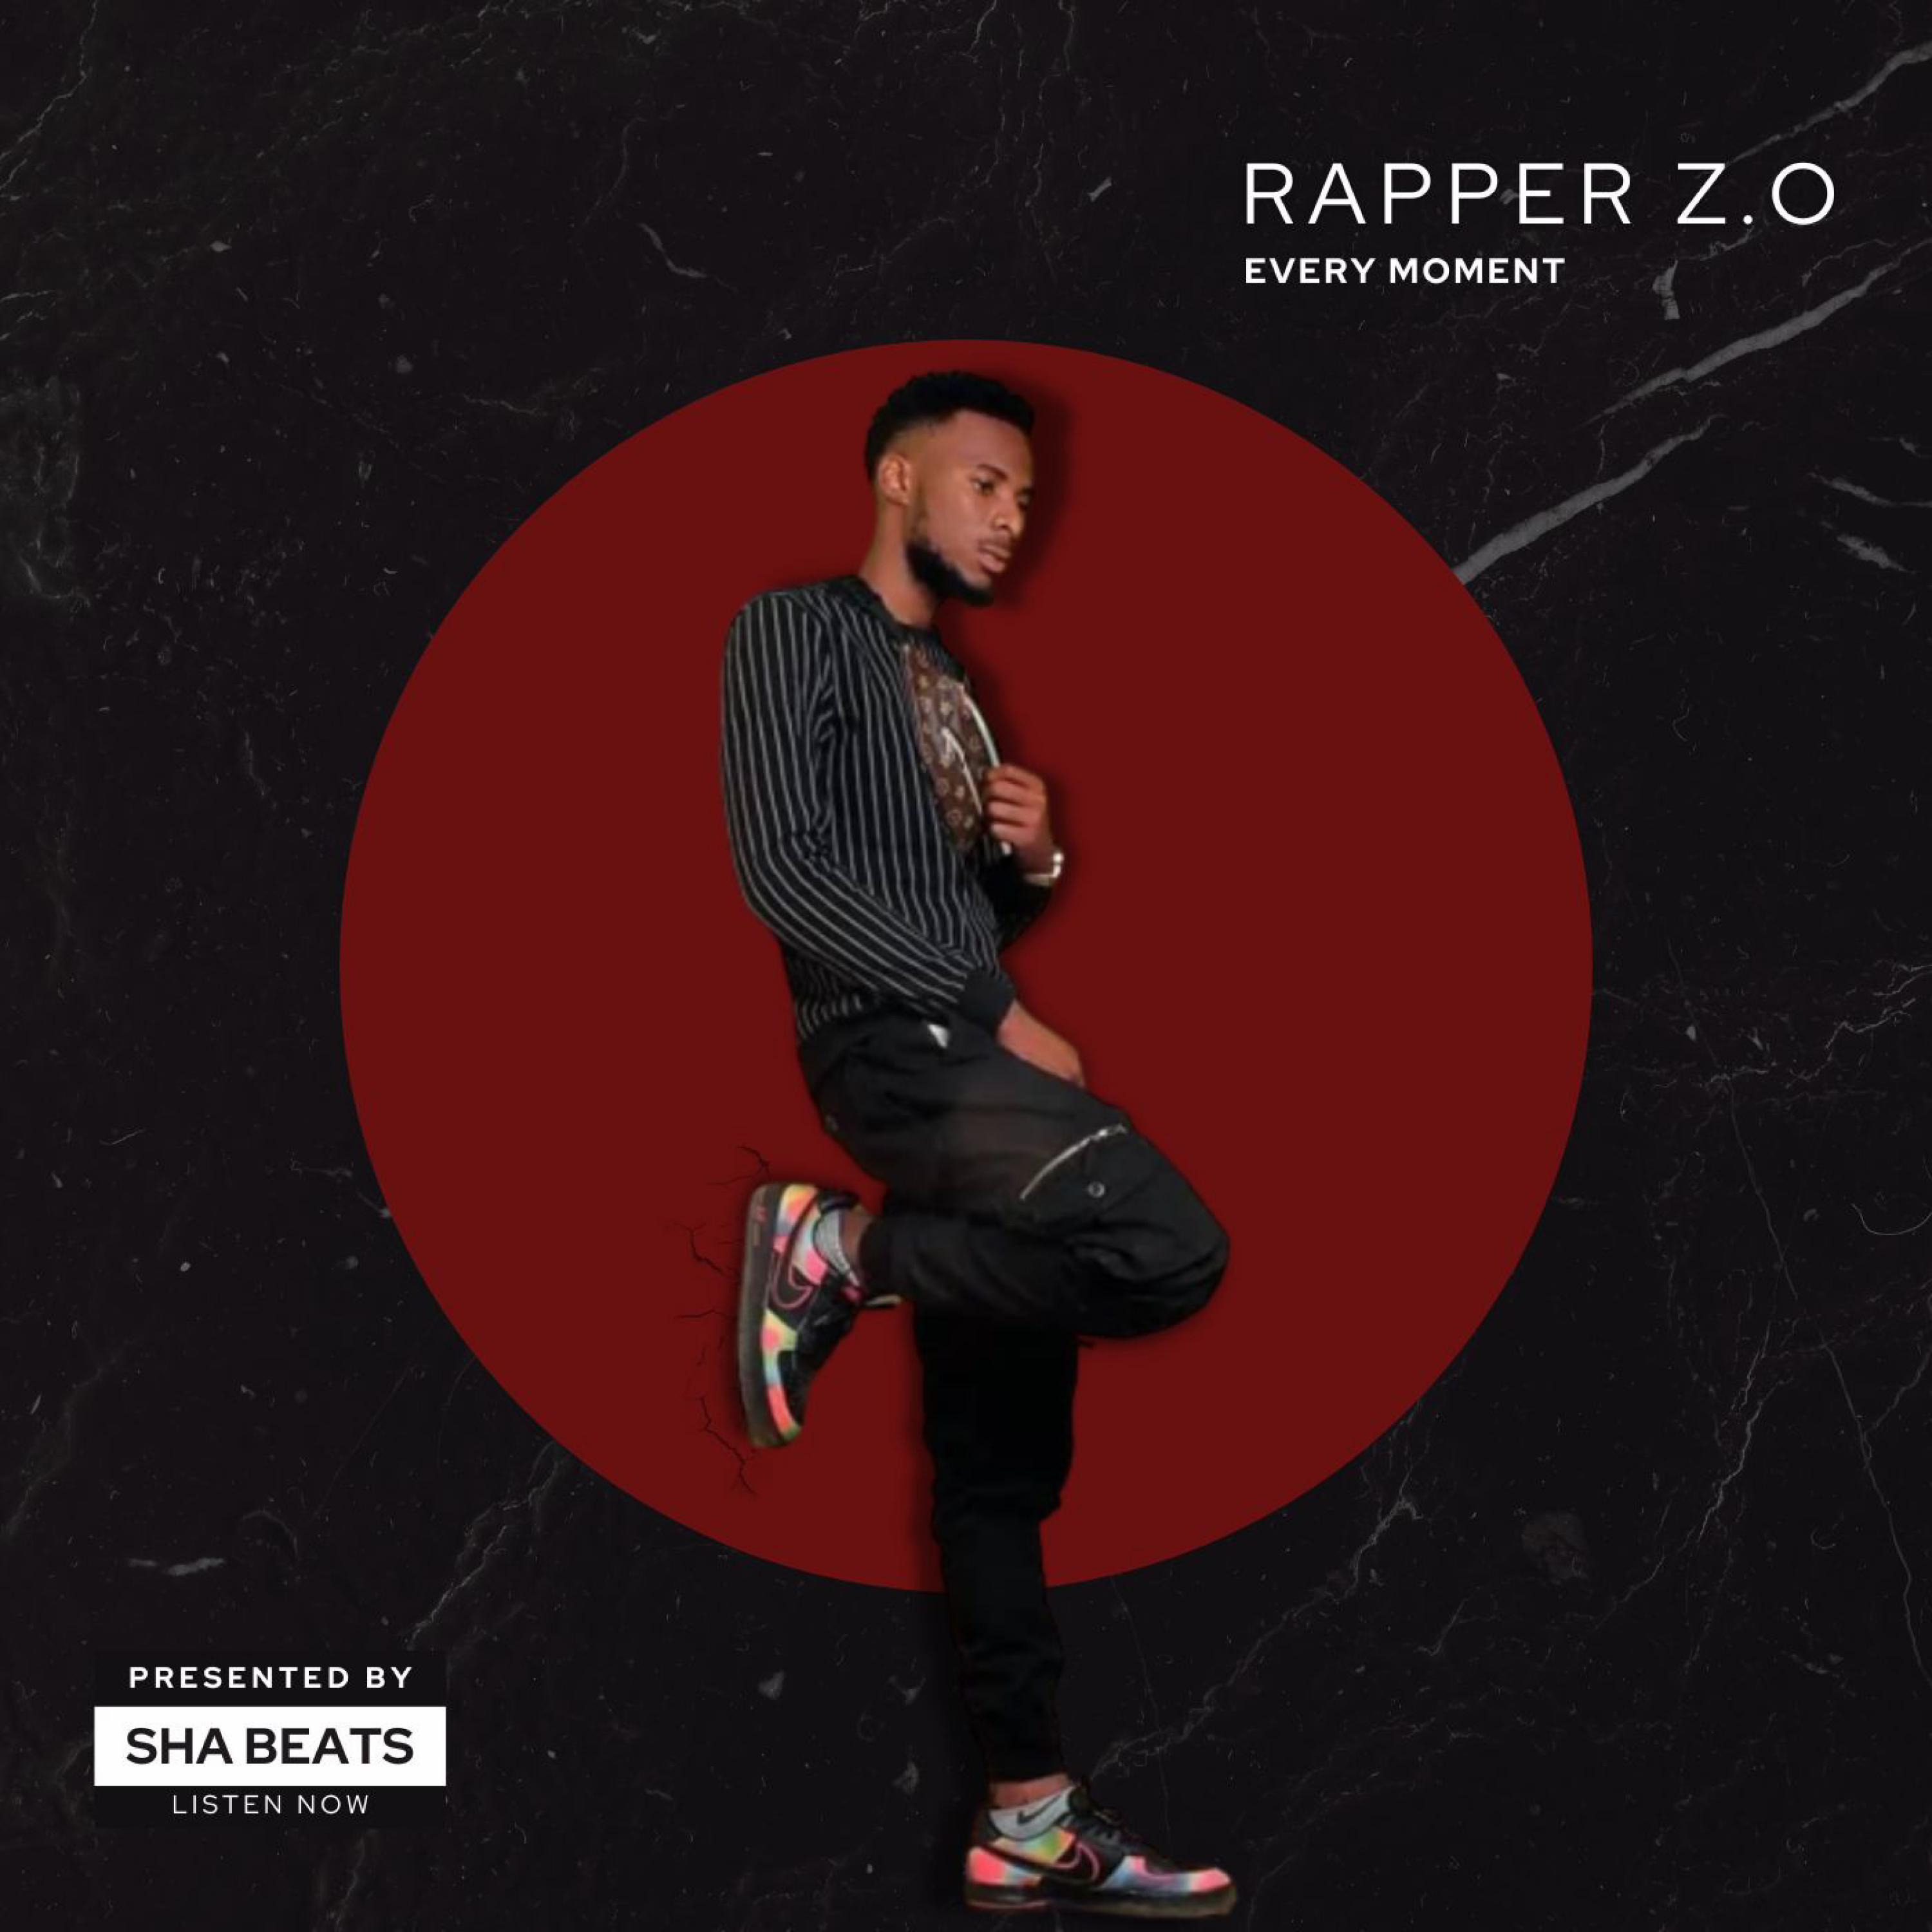 SHA Beats - CONVERSATION (feat. Rapper Z.O, RICHKID ZAMANI & T-SEAN)